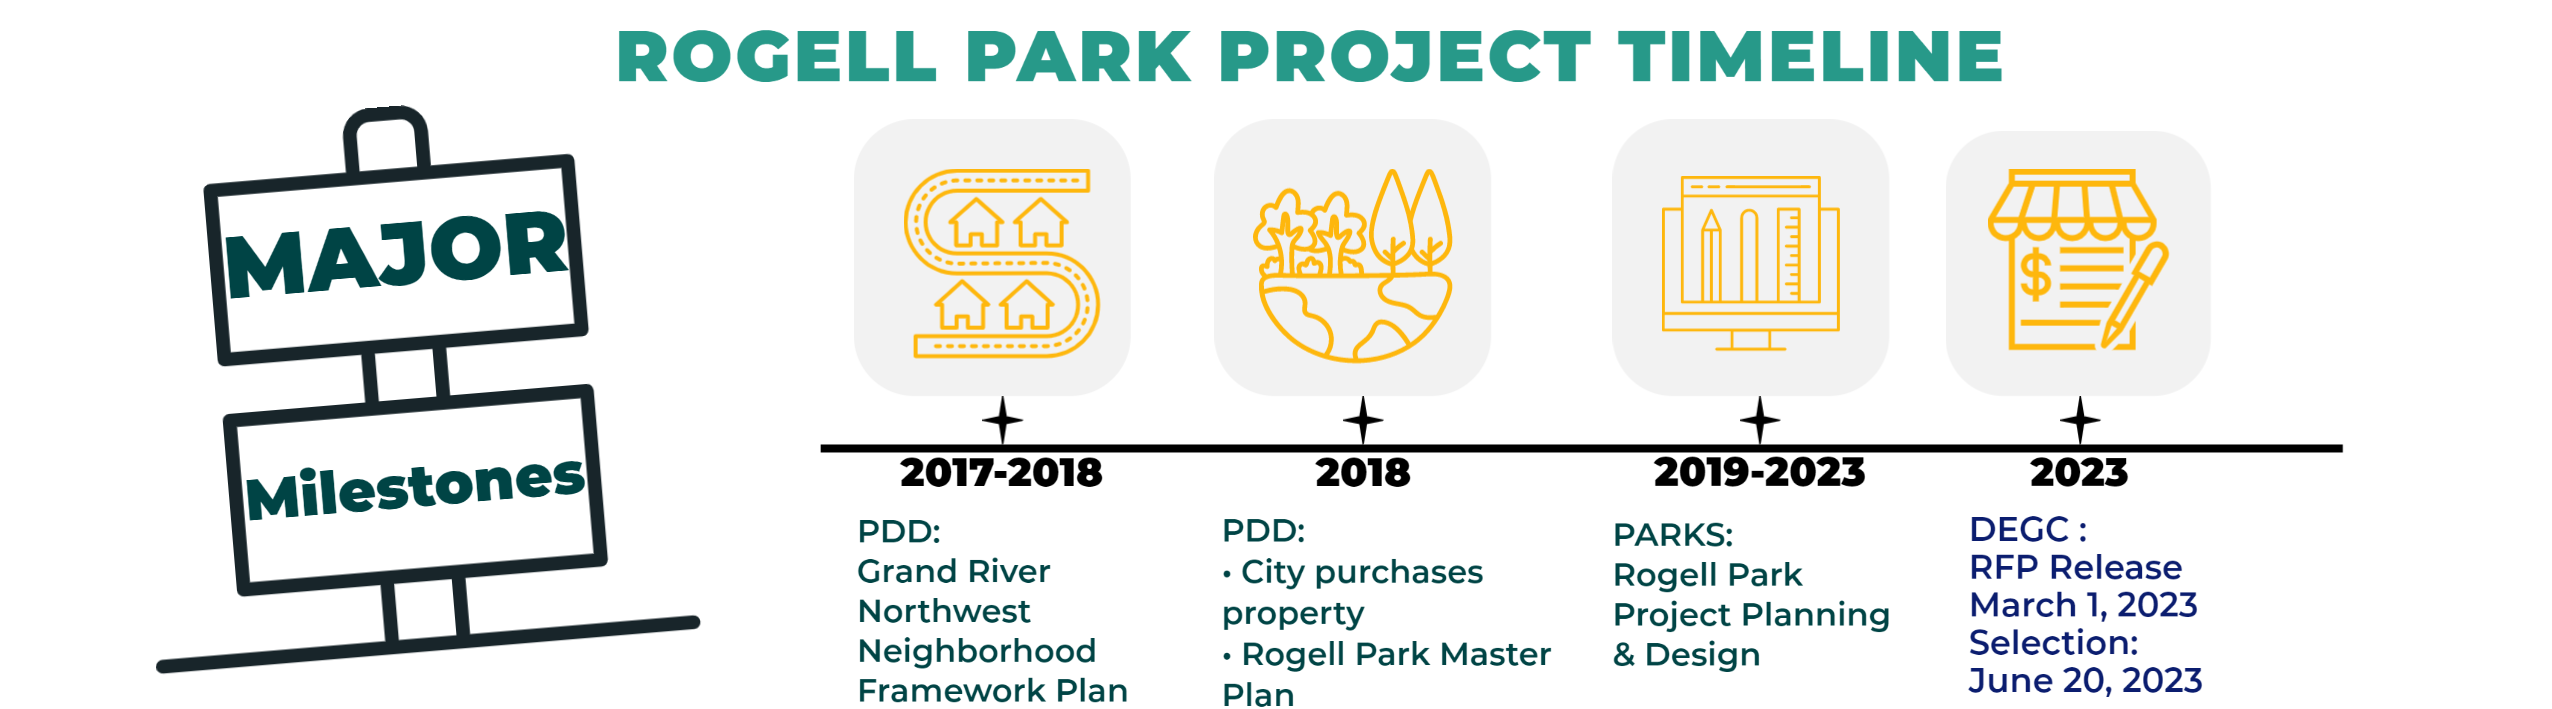 Rogell Park Major Project Milestones